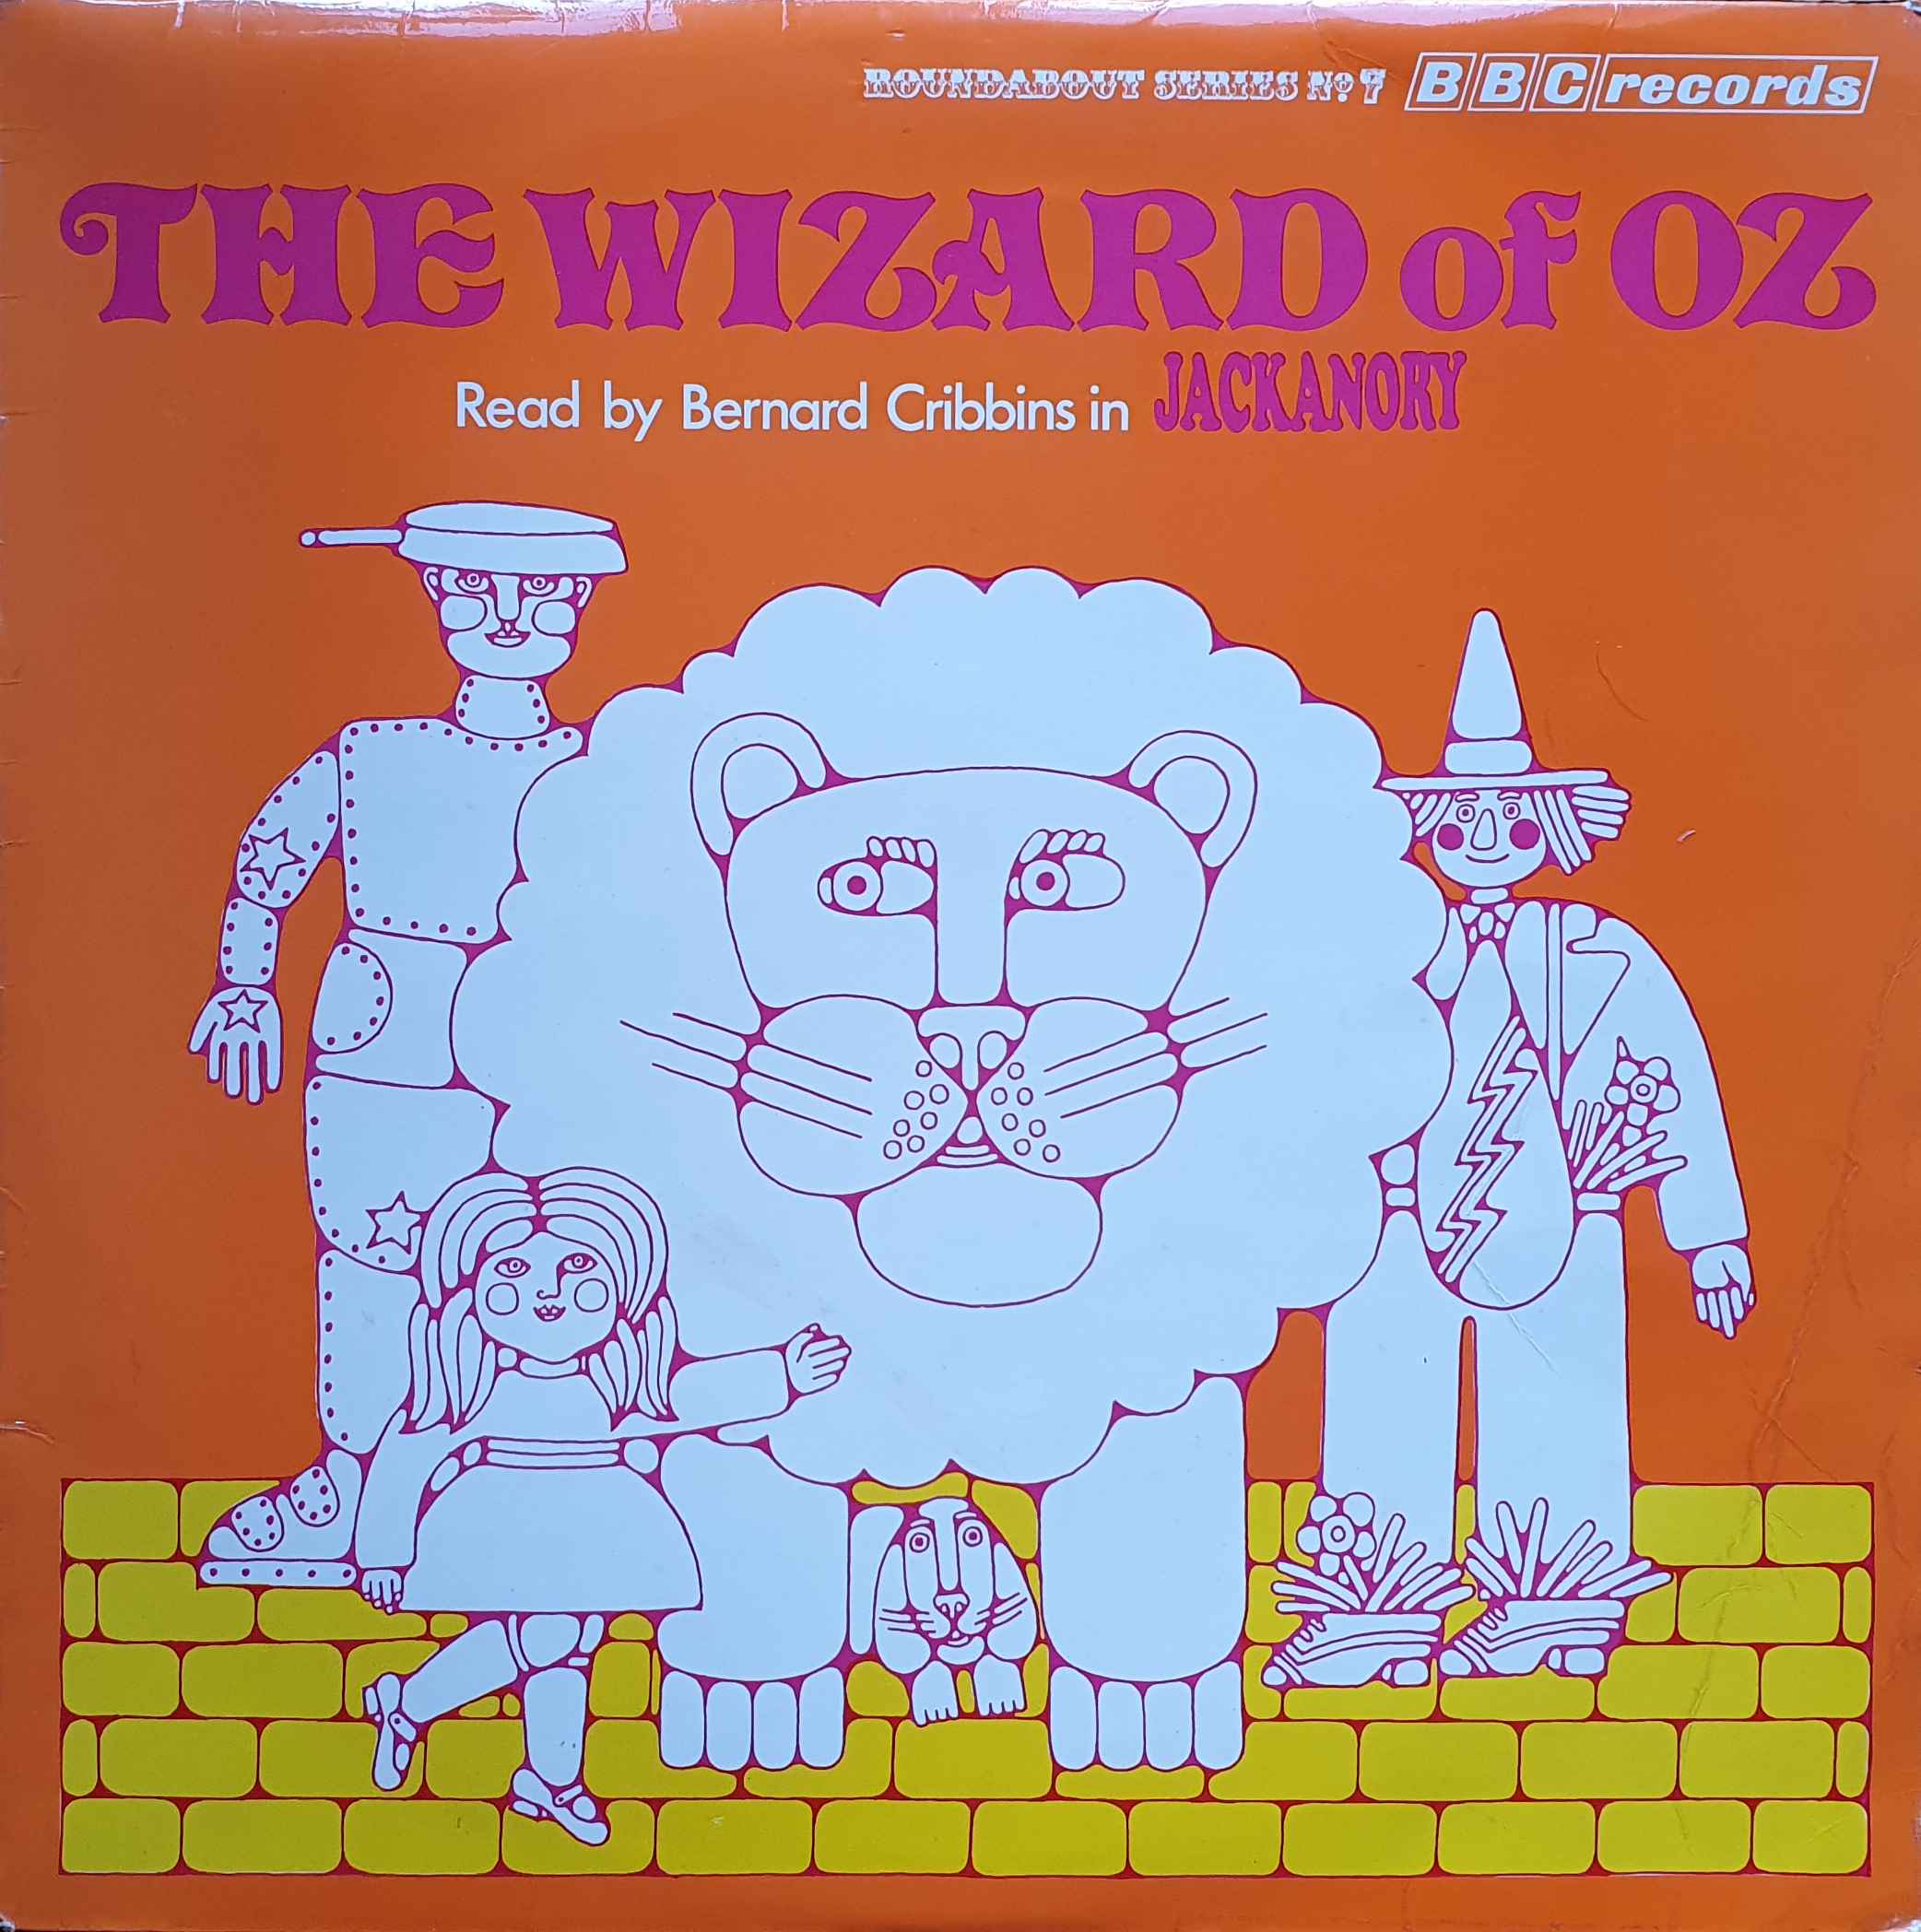 Picture of RBT 7 Wizard of oz by artist Bernard Cribbins